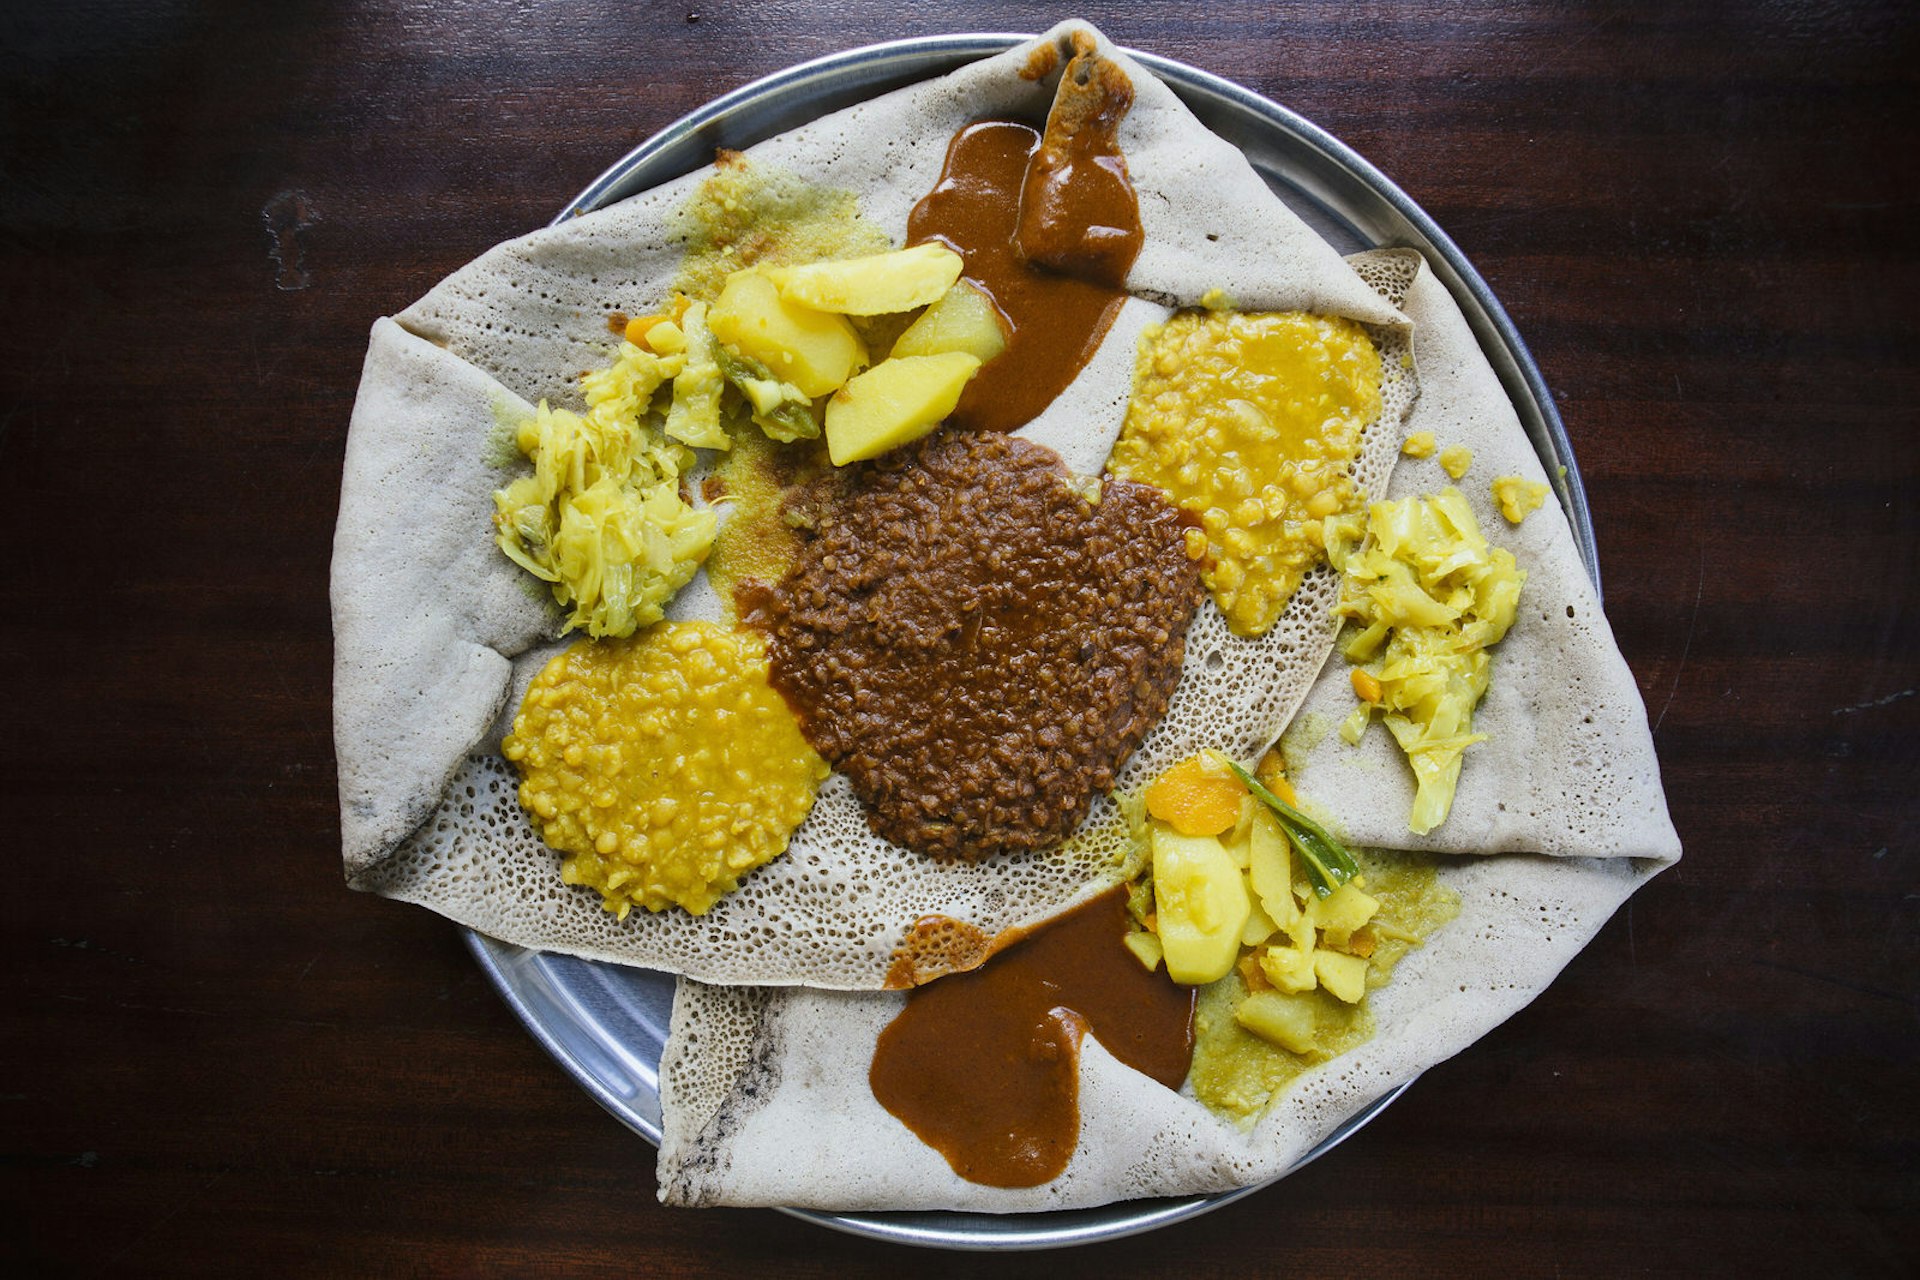 Gluten-free travel: Ethiopian food is often coeliac-friendly